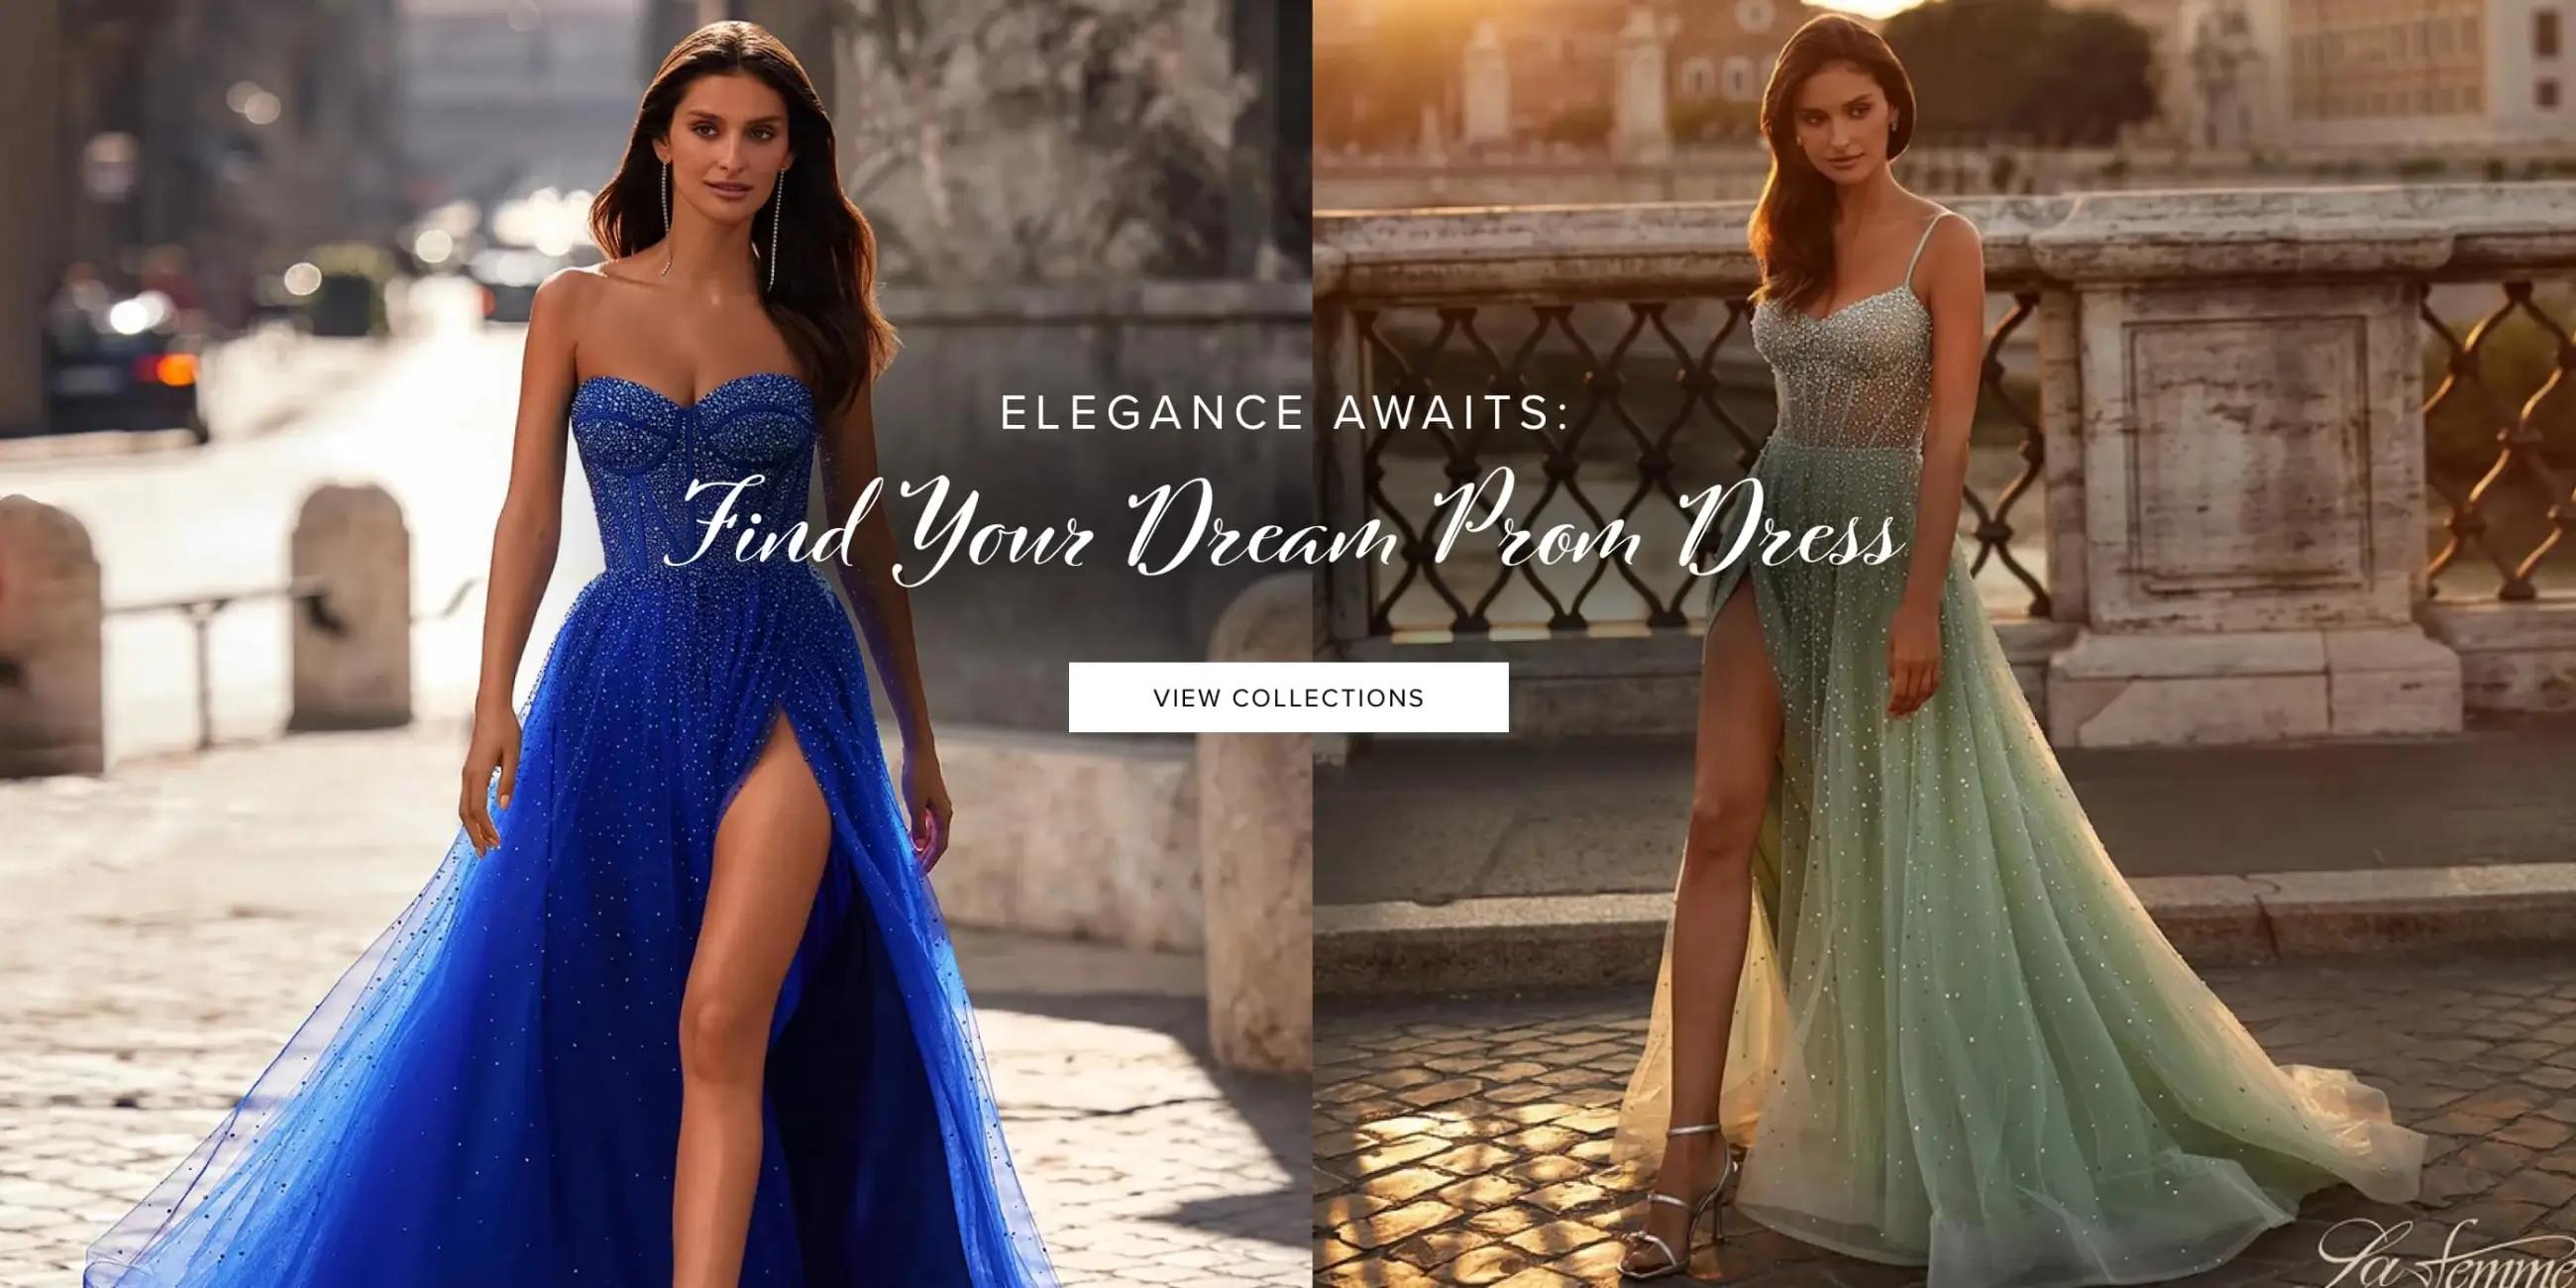 Faviana Prom Dresses Toronto, Wedding Dresses & Gowns